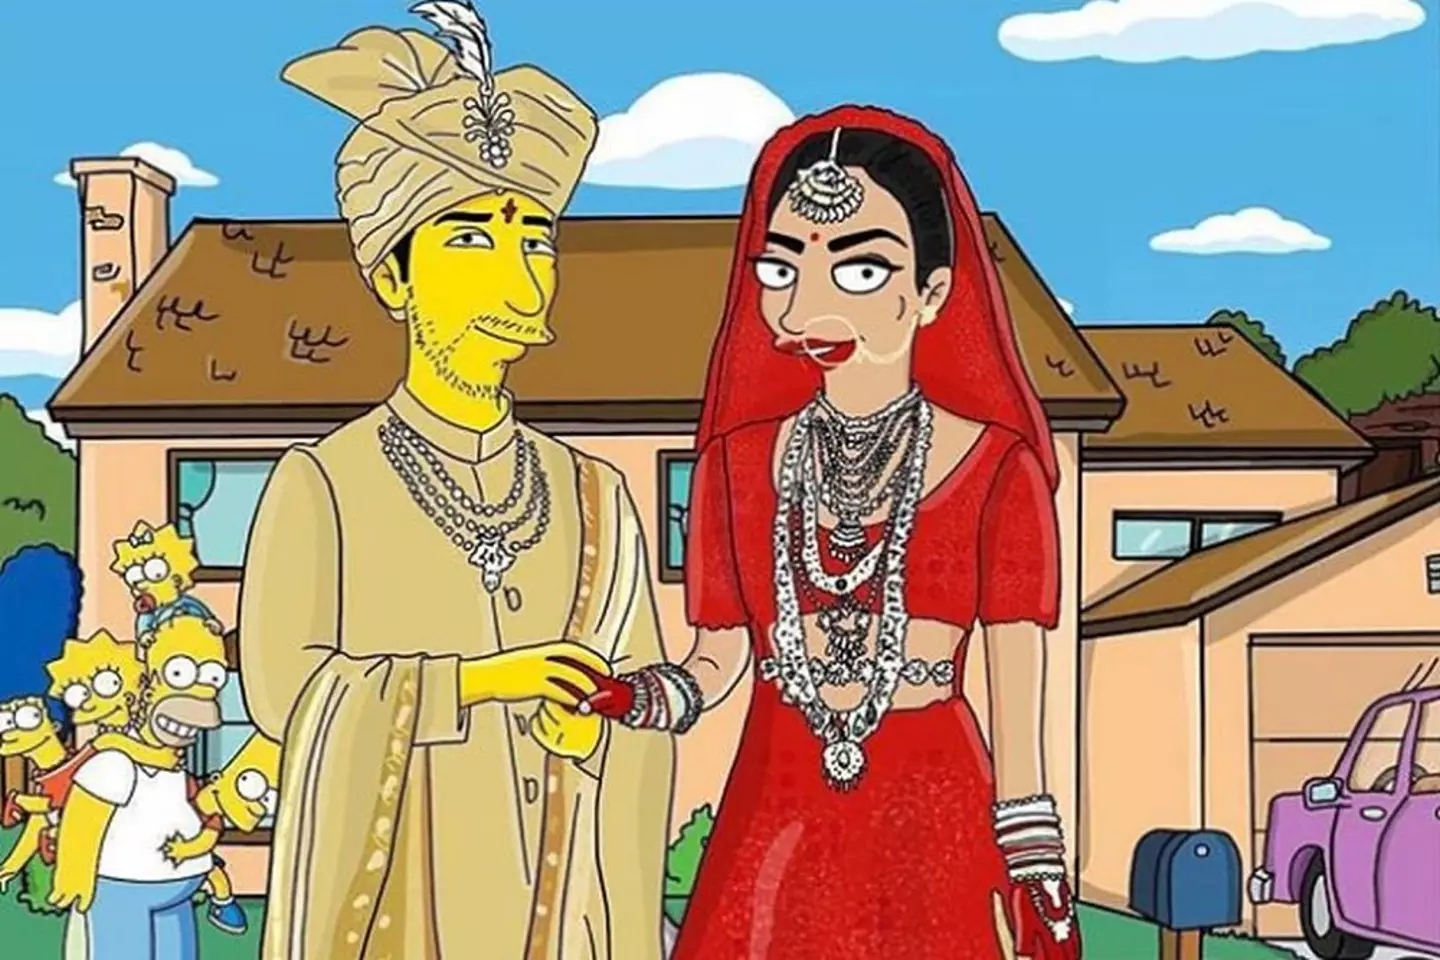 Priyanka Chopra Jonas and husband Nick Jonas were turned into The Simpsons characters as a wedding gift.